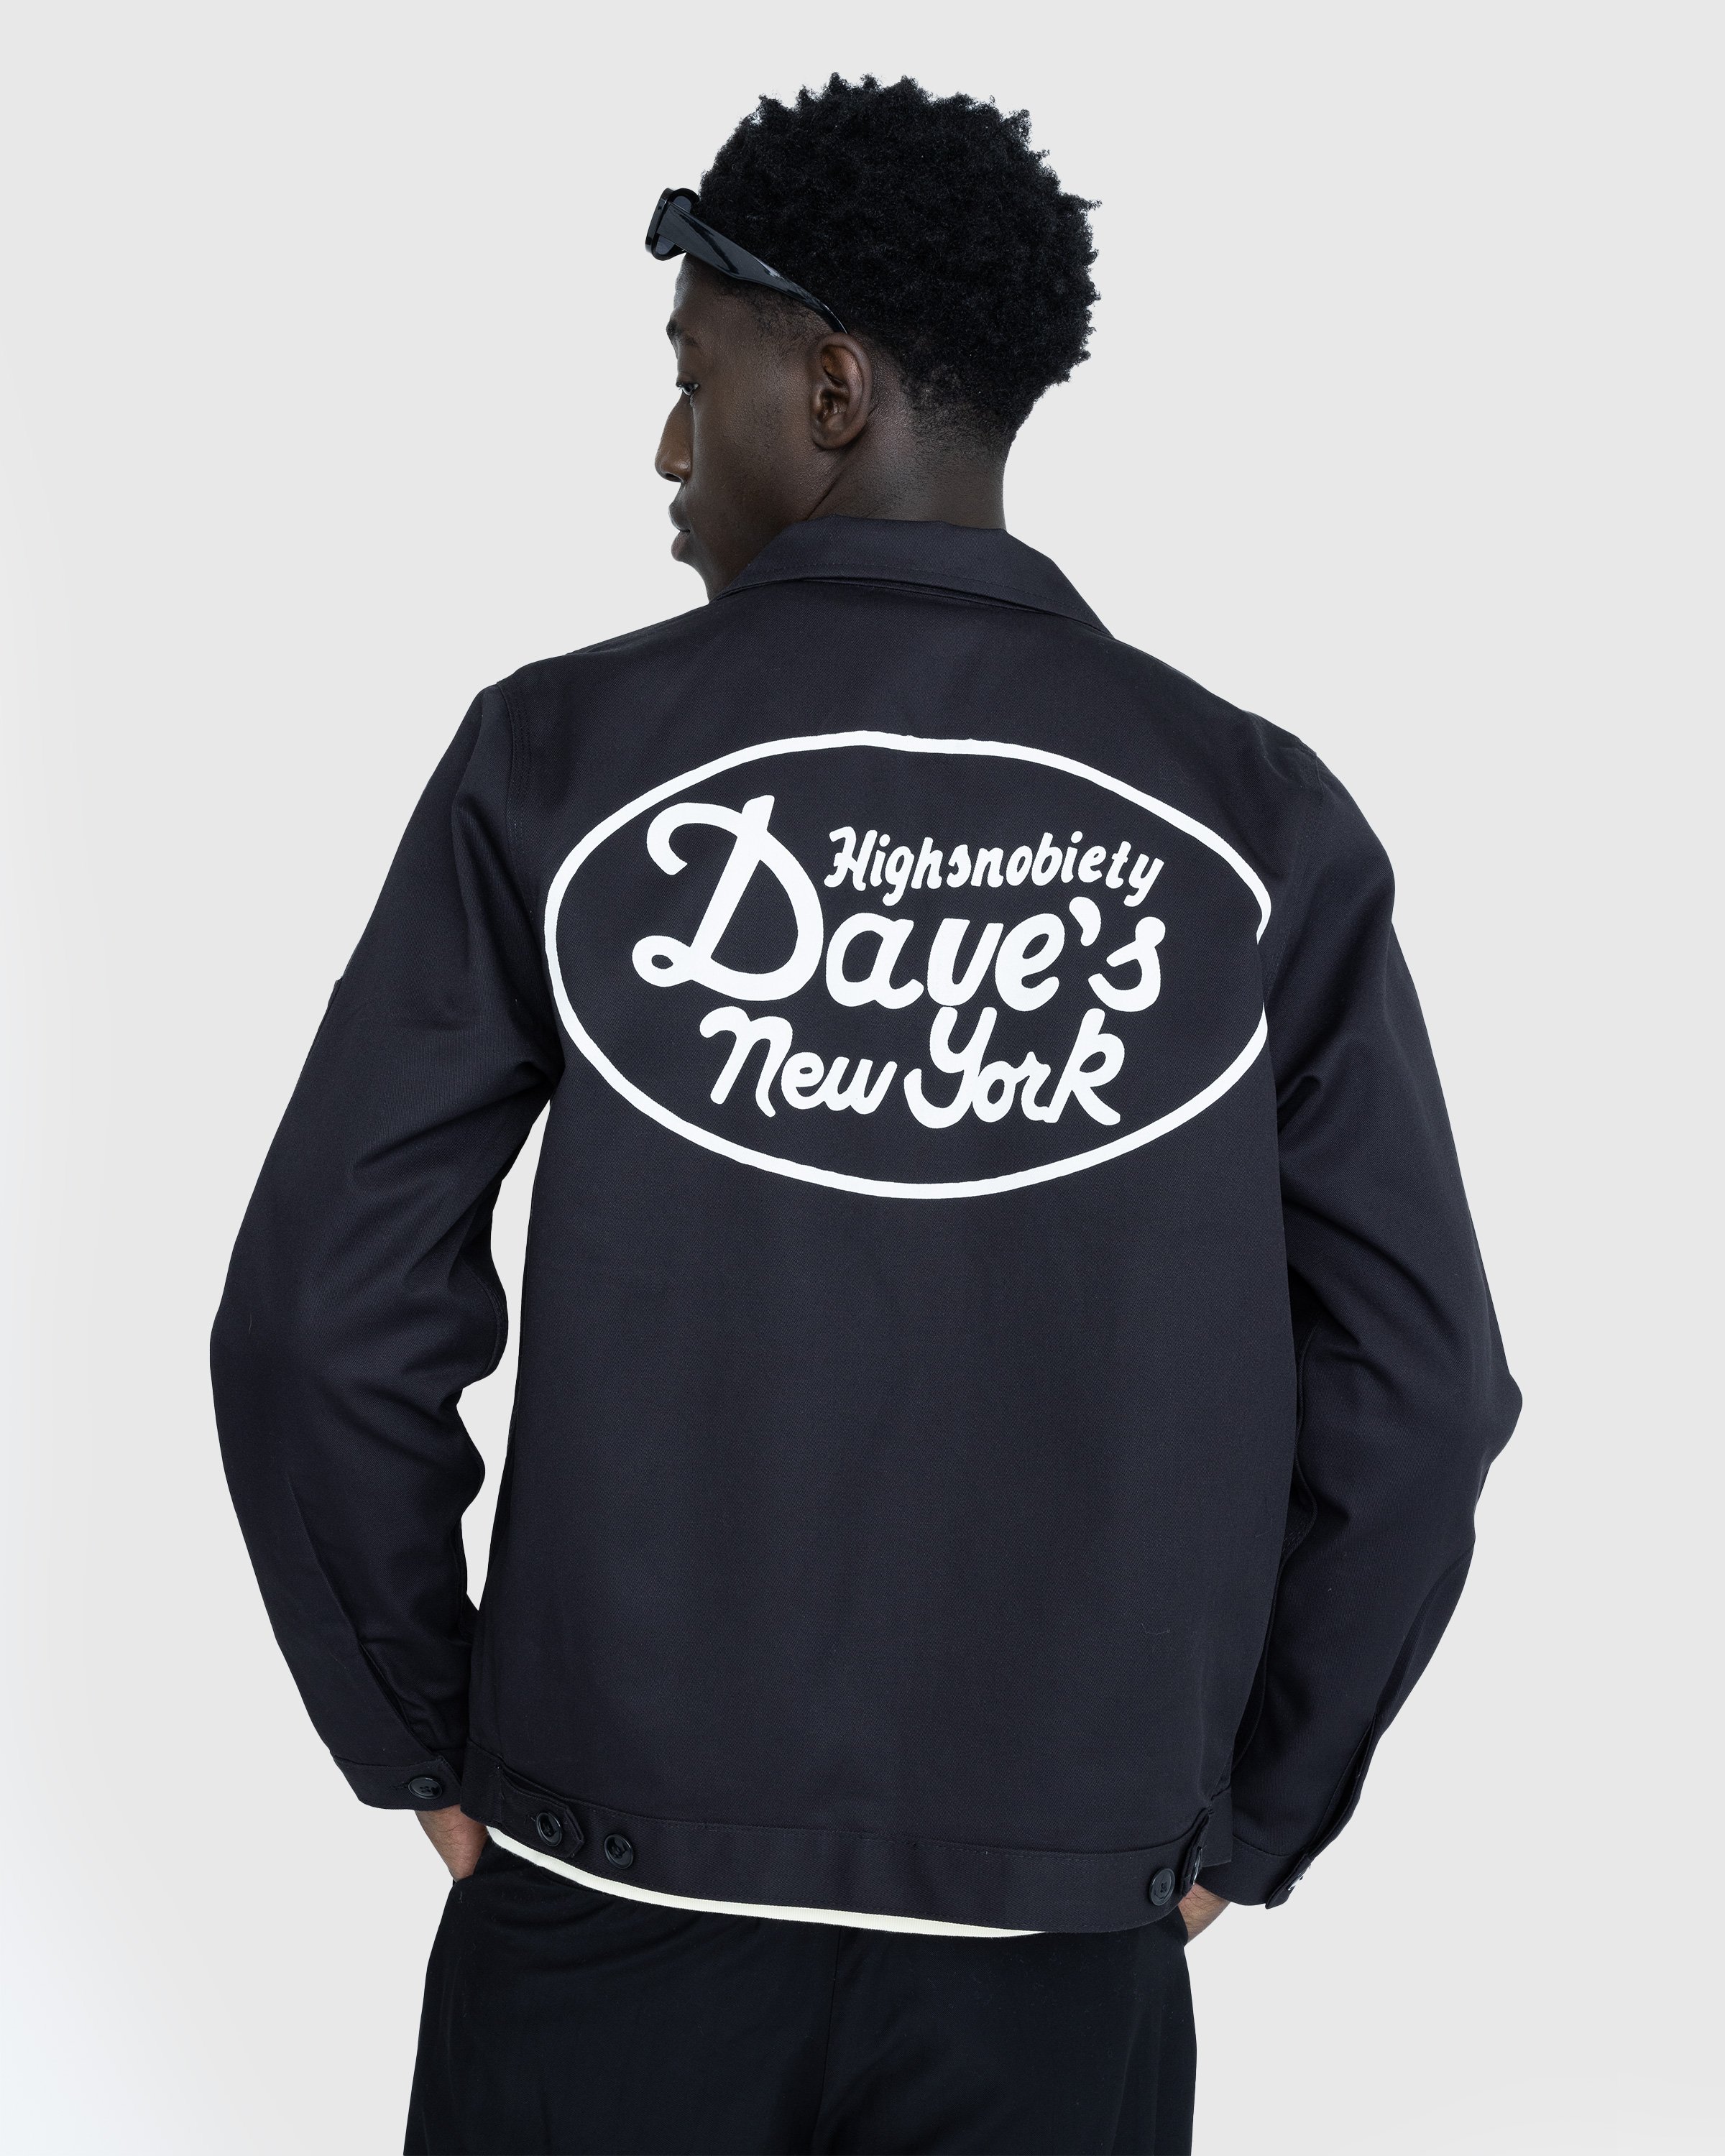 Dave's New York x Highsnobiety - Dickies Eisenhower Jacket - Clothing - Black - Image 4